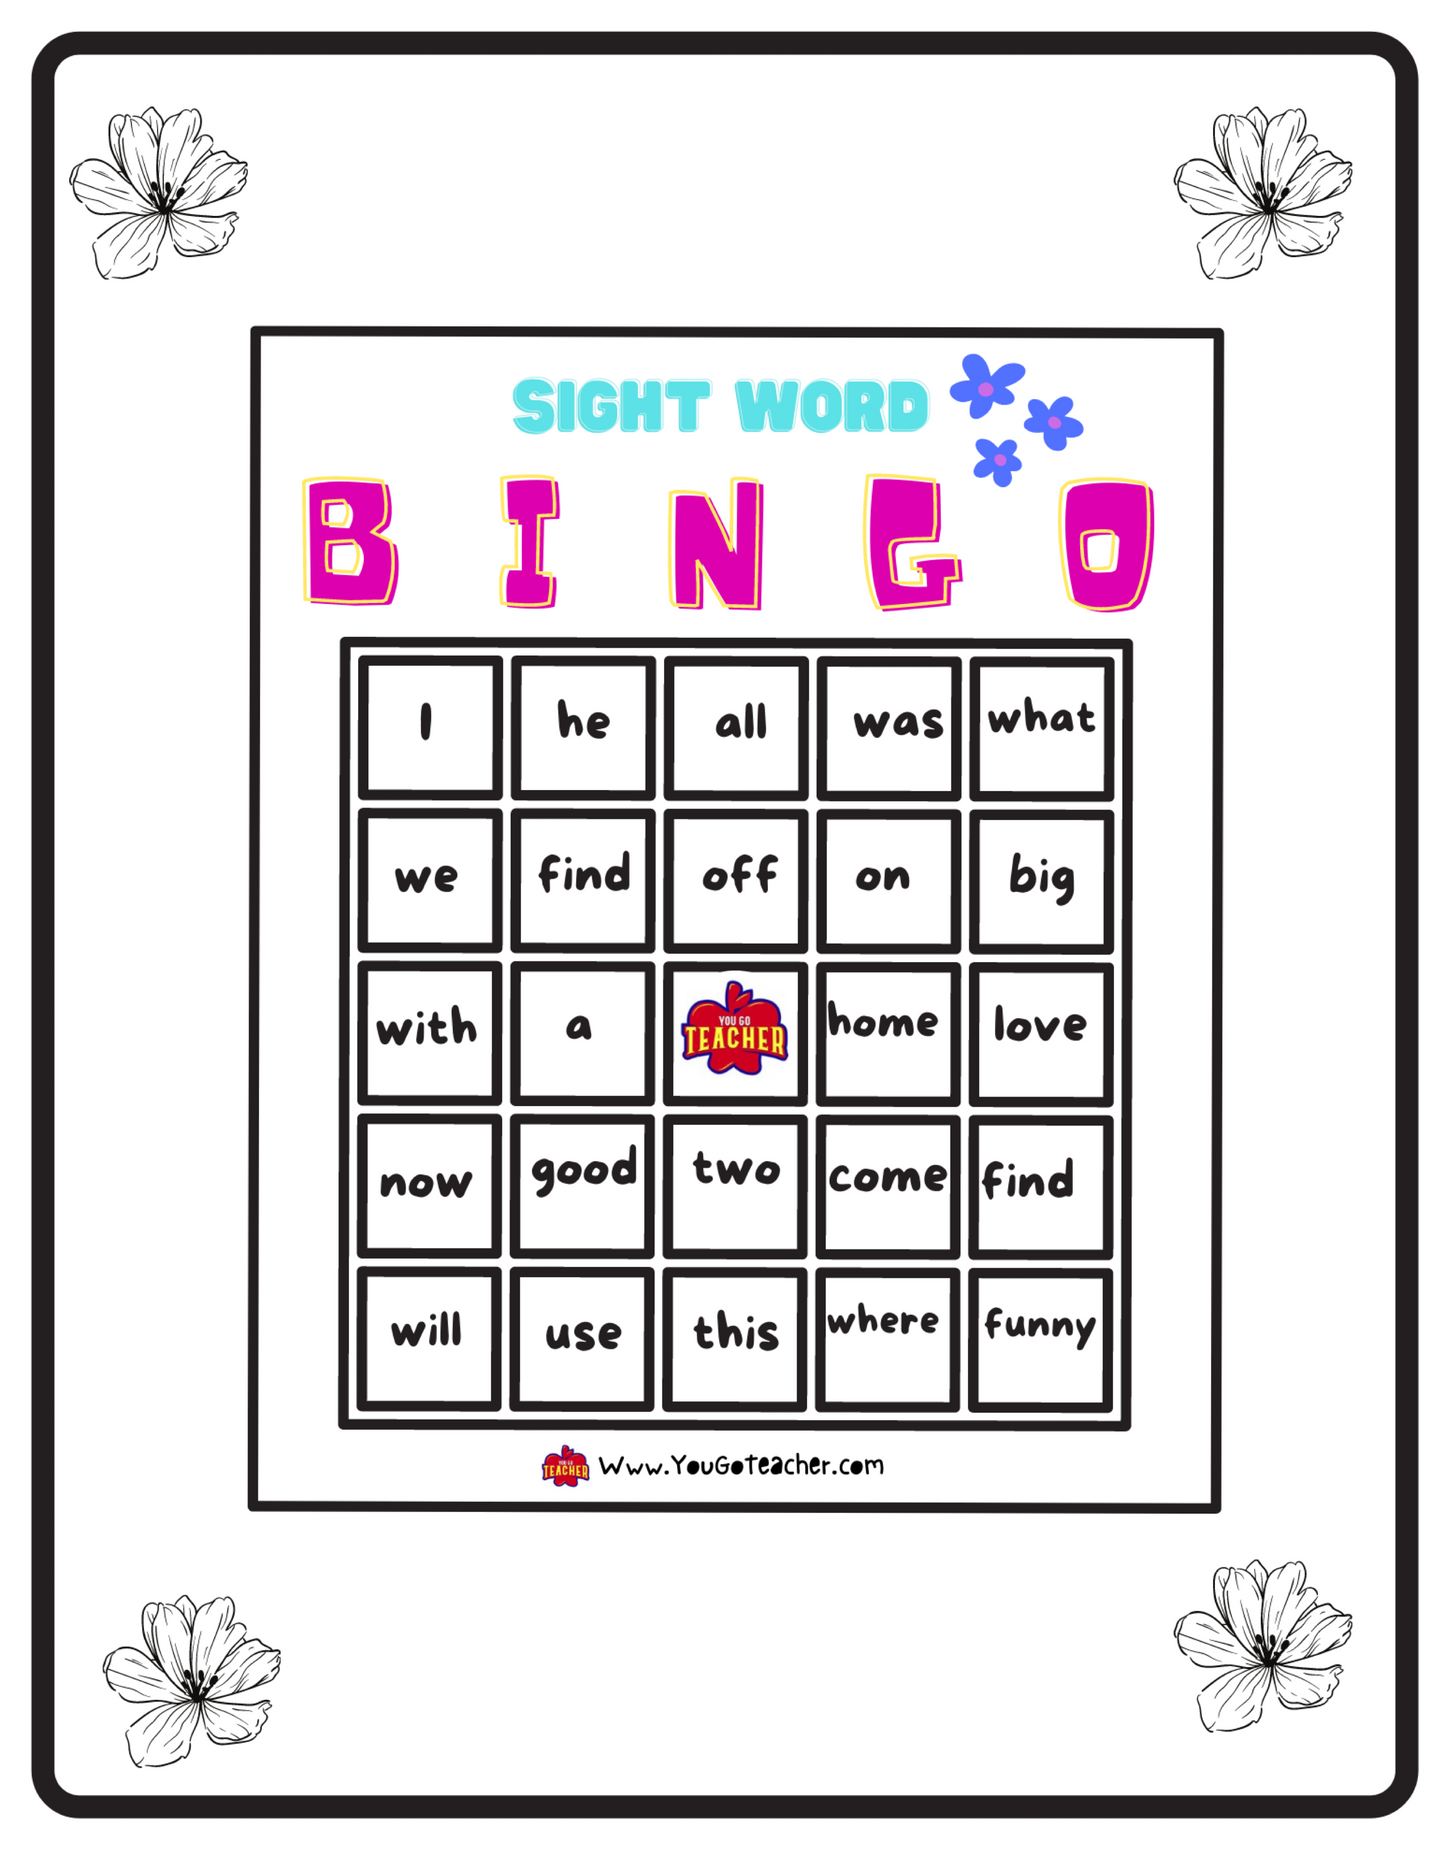  Sight Word Bingo Game for Children